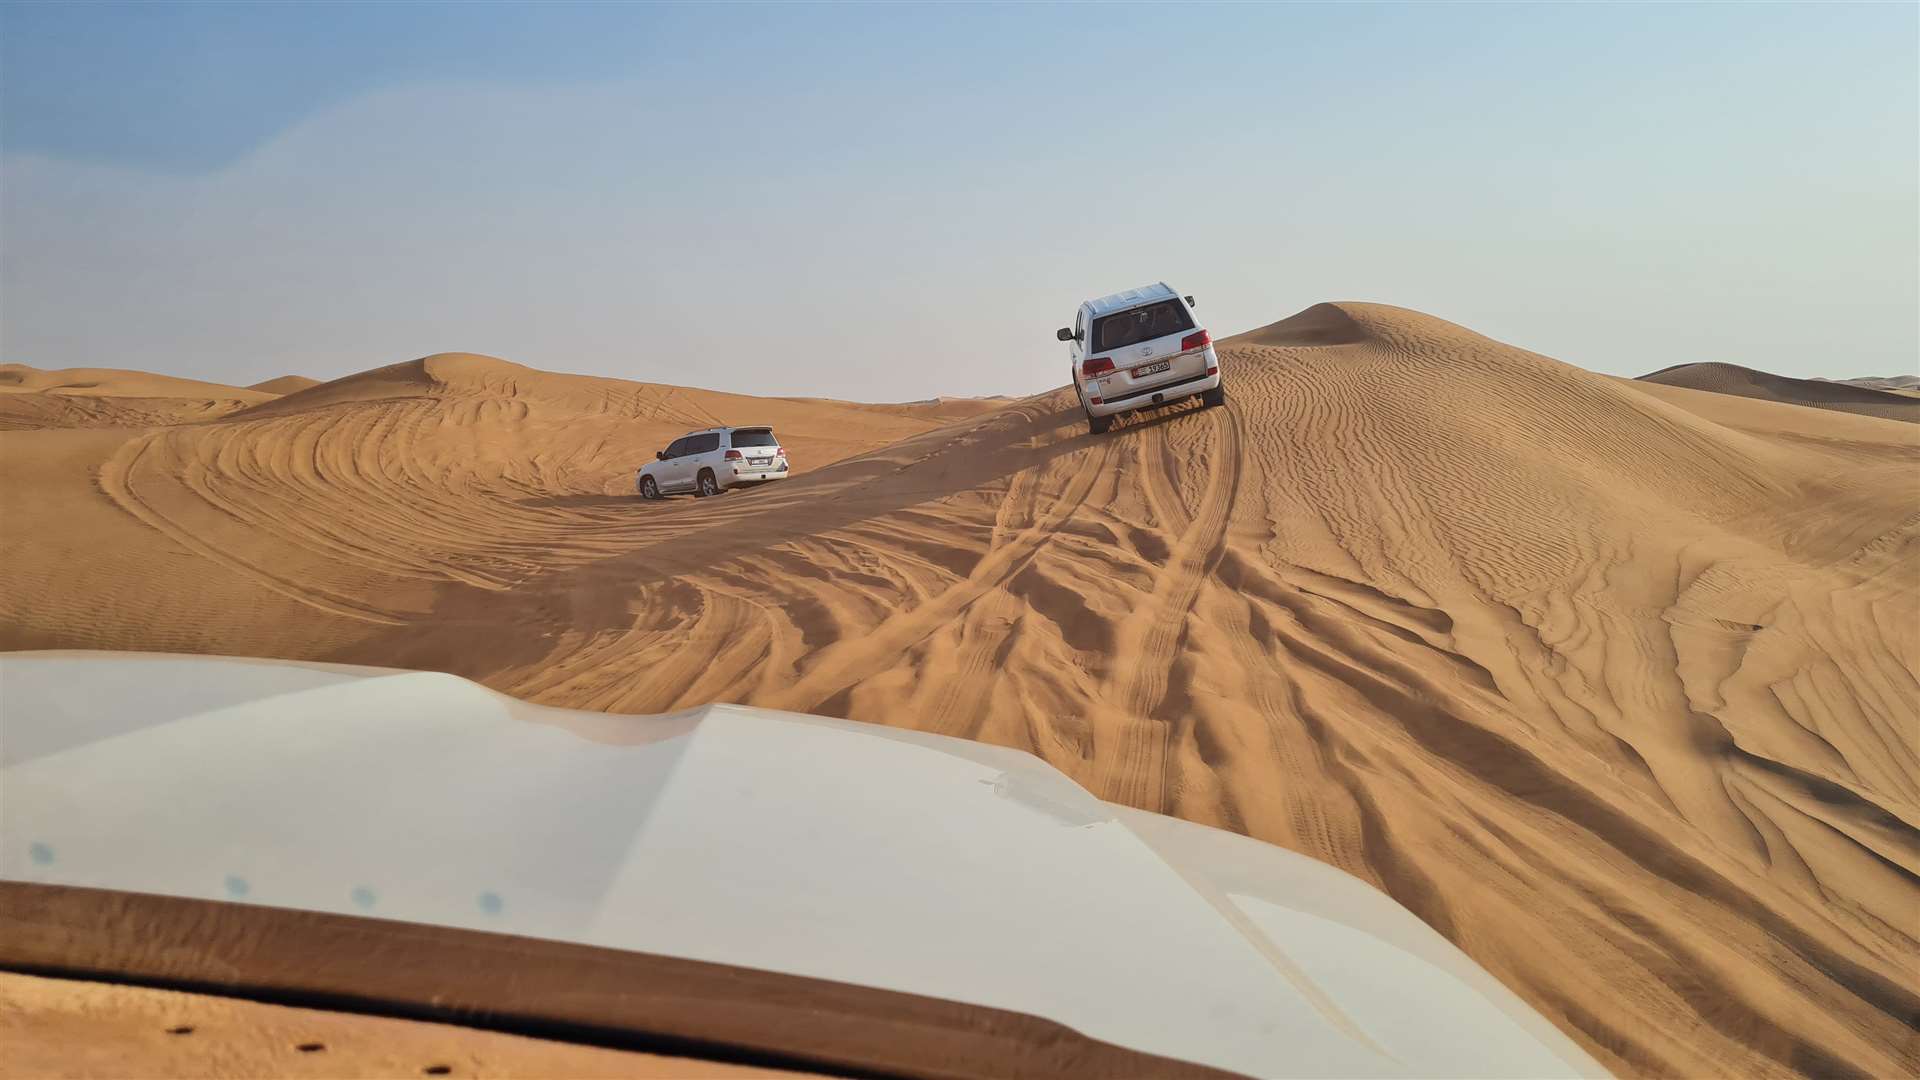 Dune bashing in 4x4s in Dubai